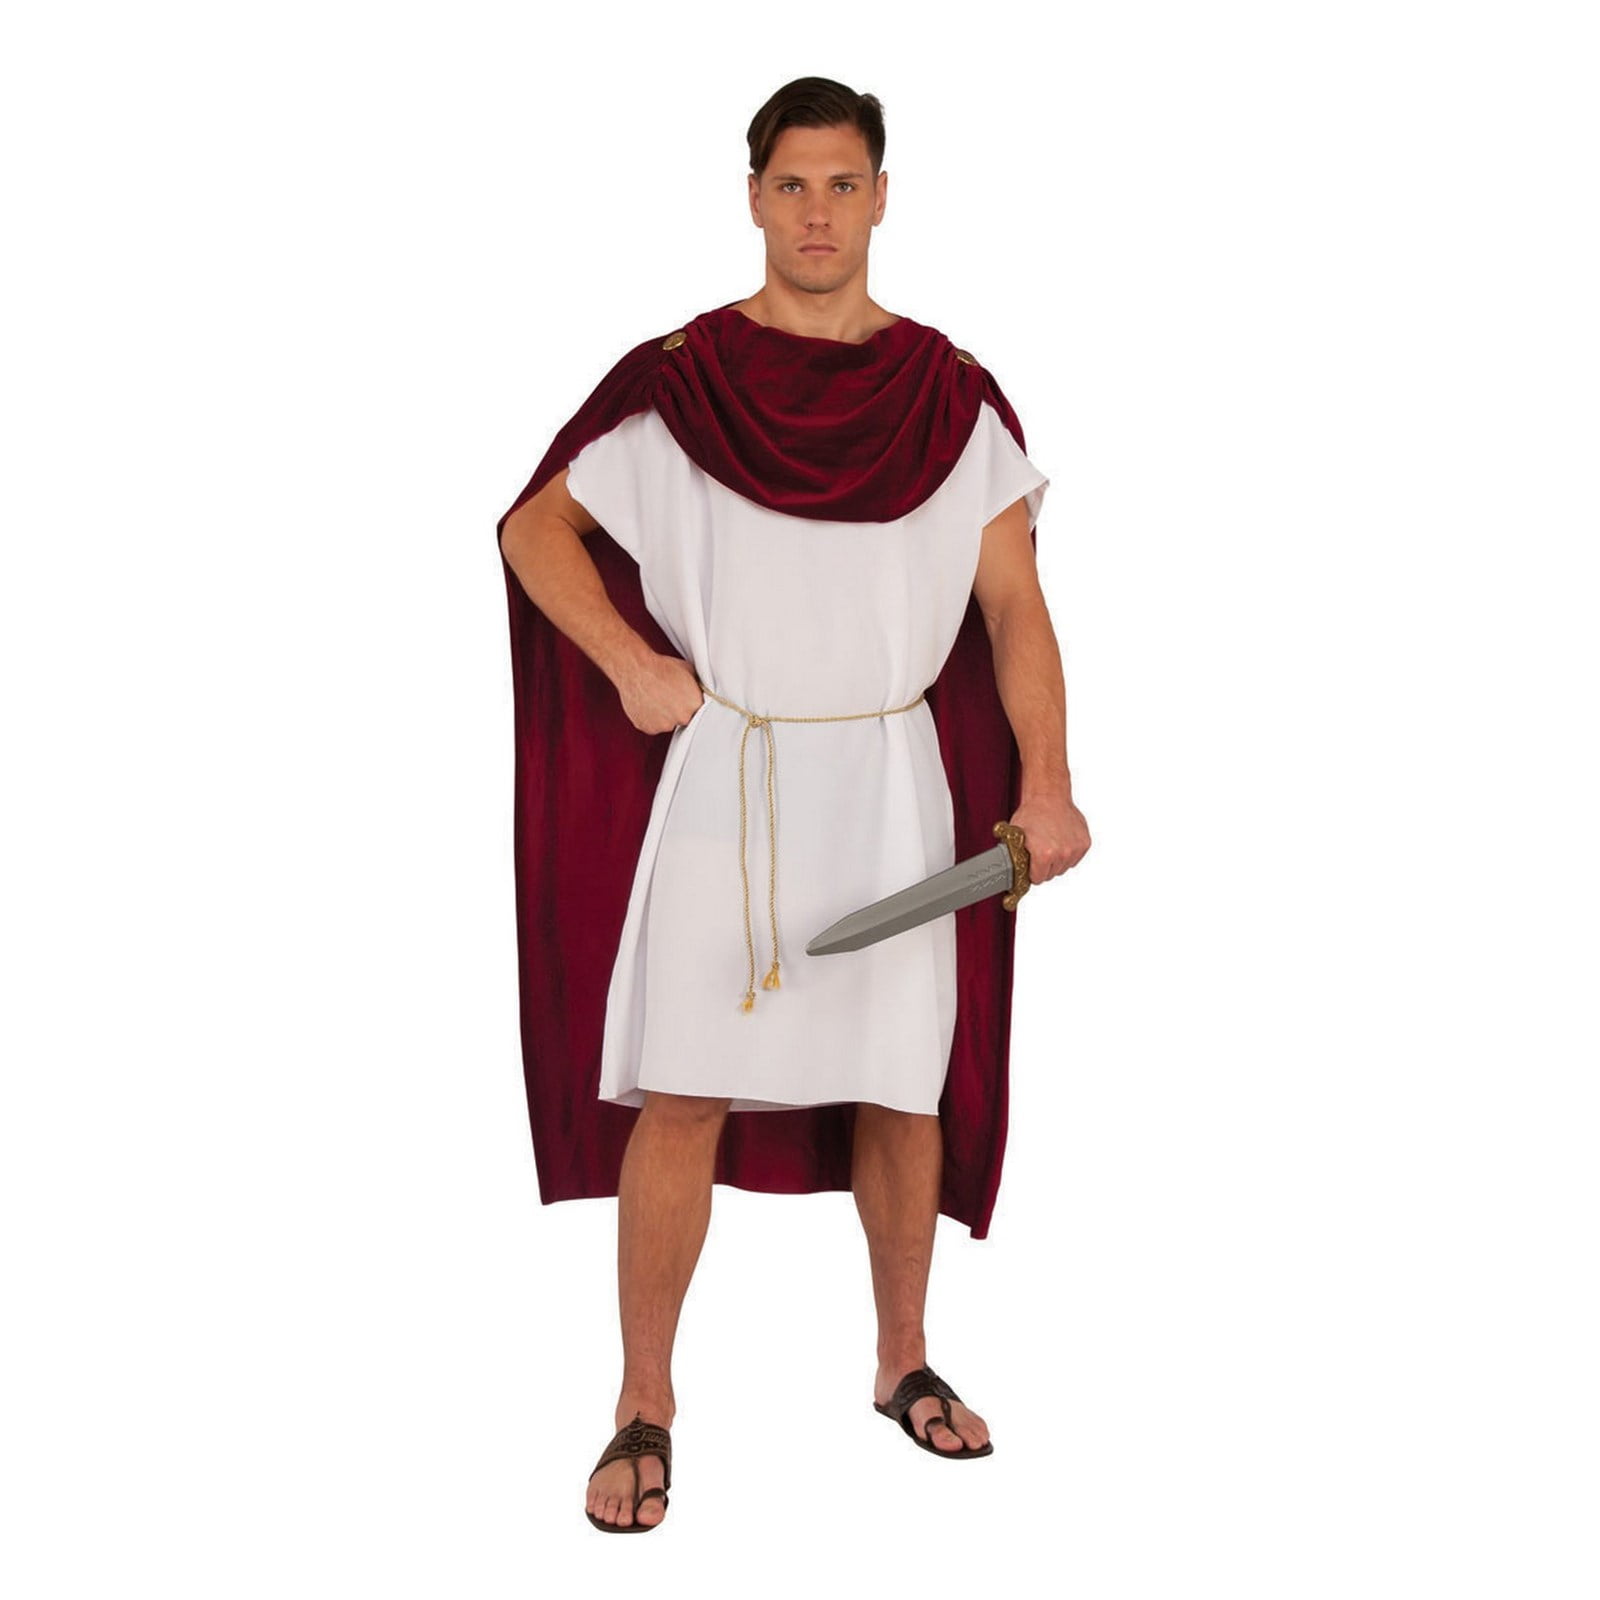 Greek Gods Costume picture photo